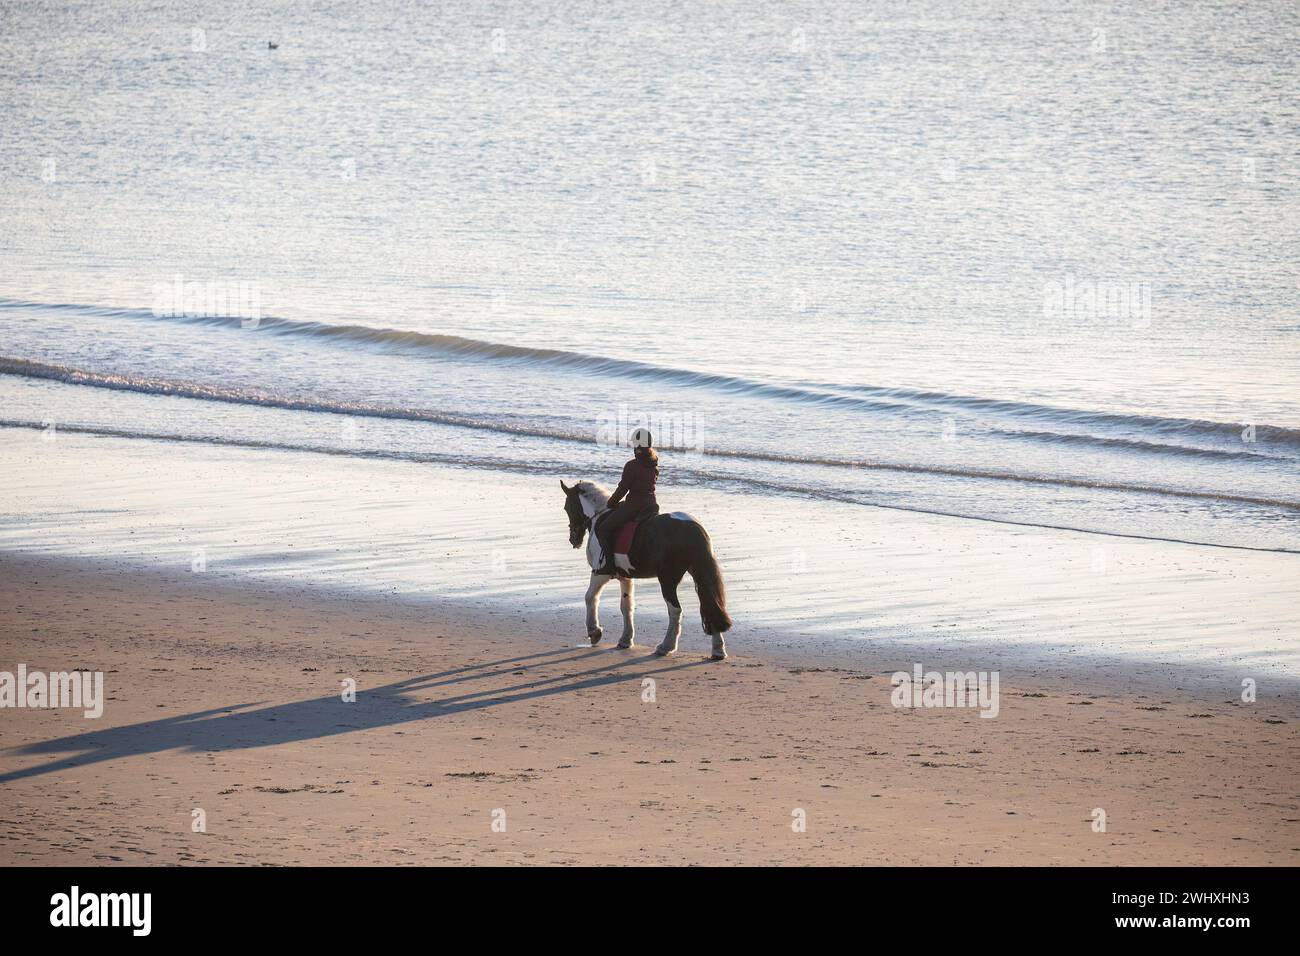 Woman riding horse on sand beach Stock Photo